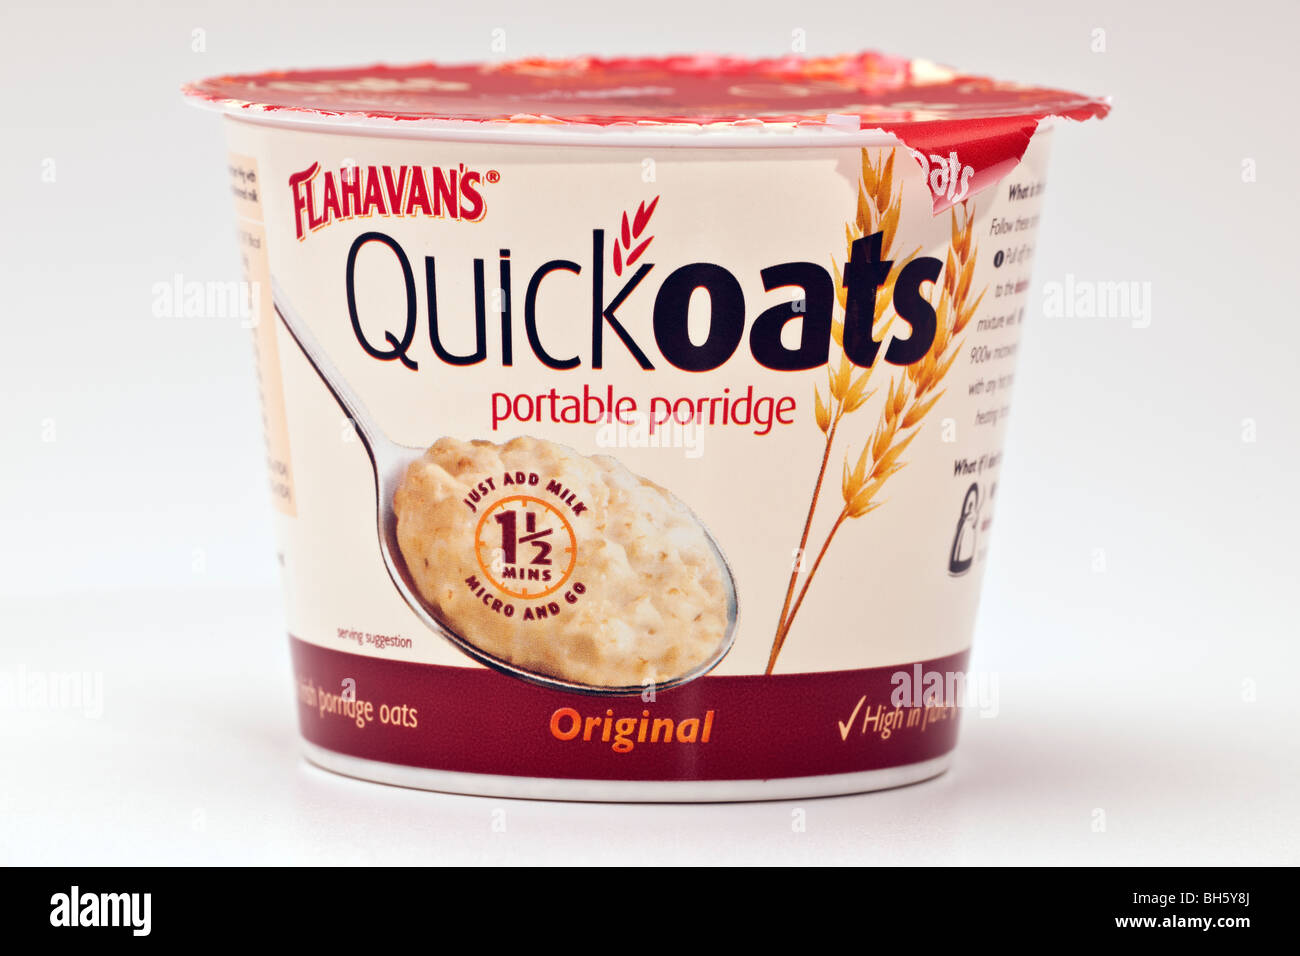 Small tub of Flahavans quick oats portable porridge Stock Photo